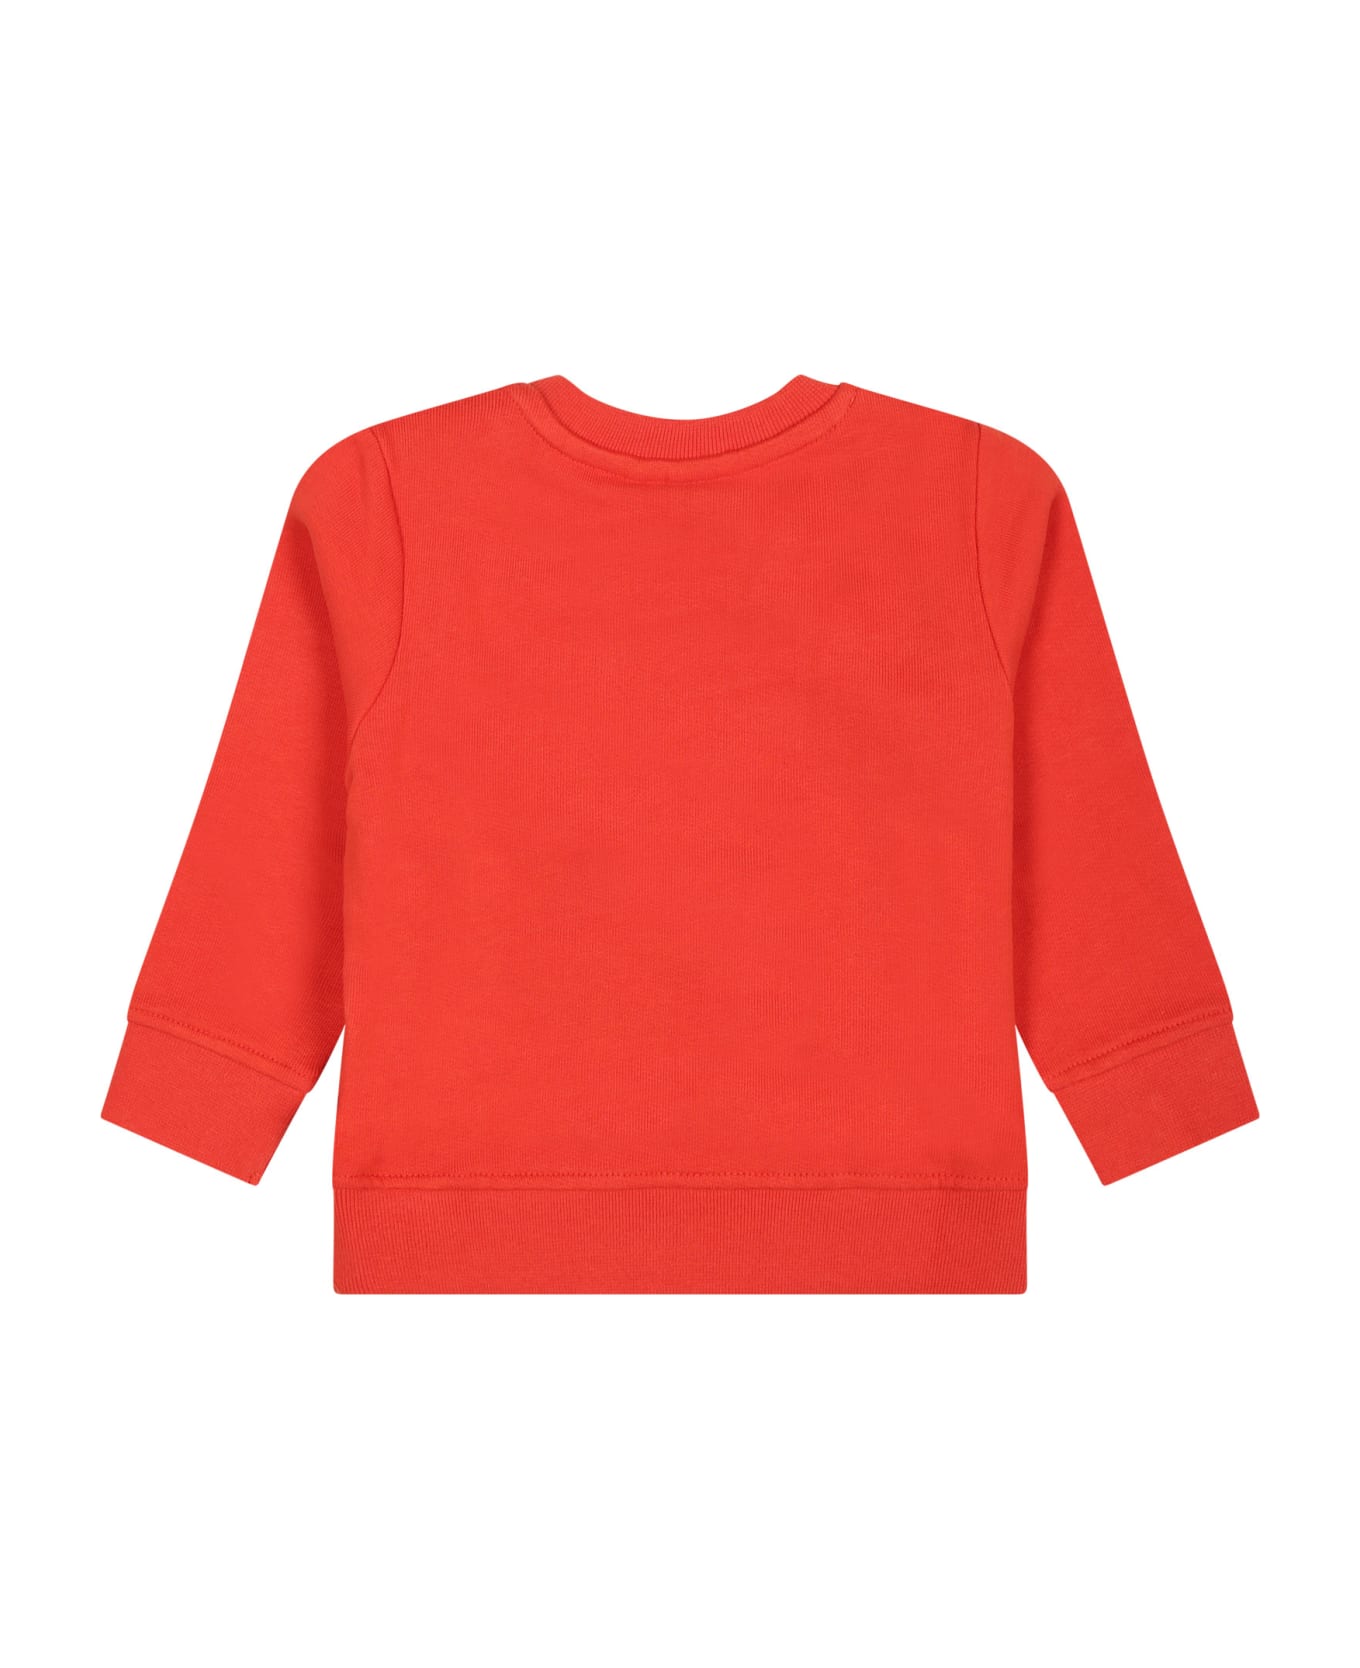 Stella McCartney Kids Red Sweatshirt For Baby Boy With Sun - Red